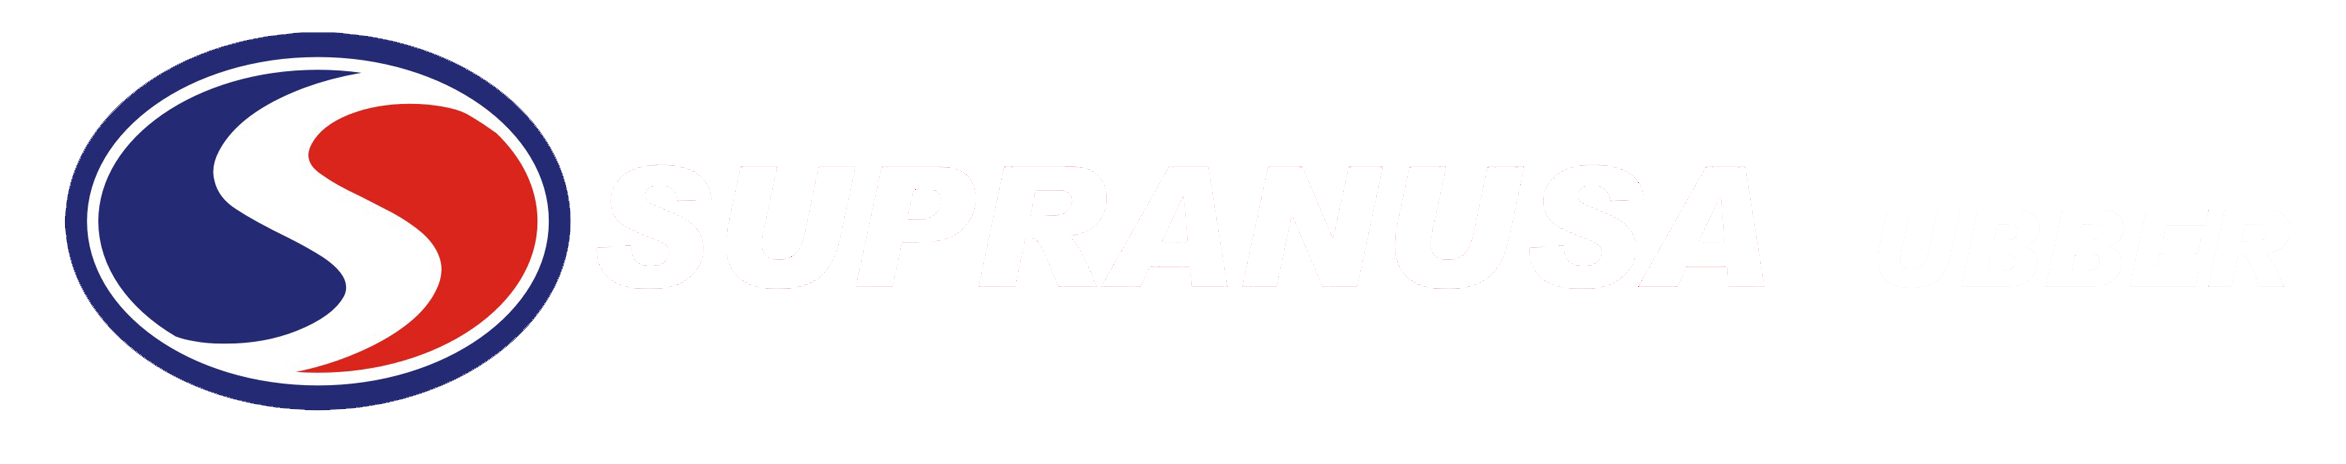 brand-1